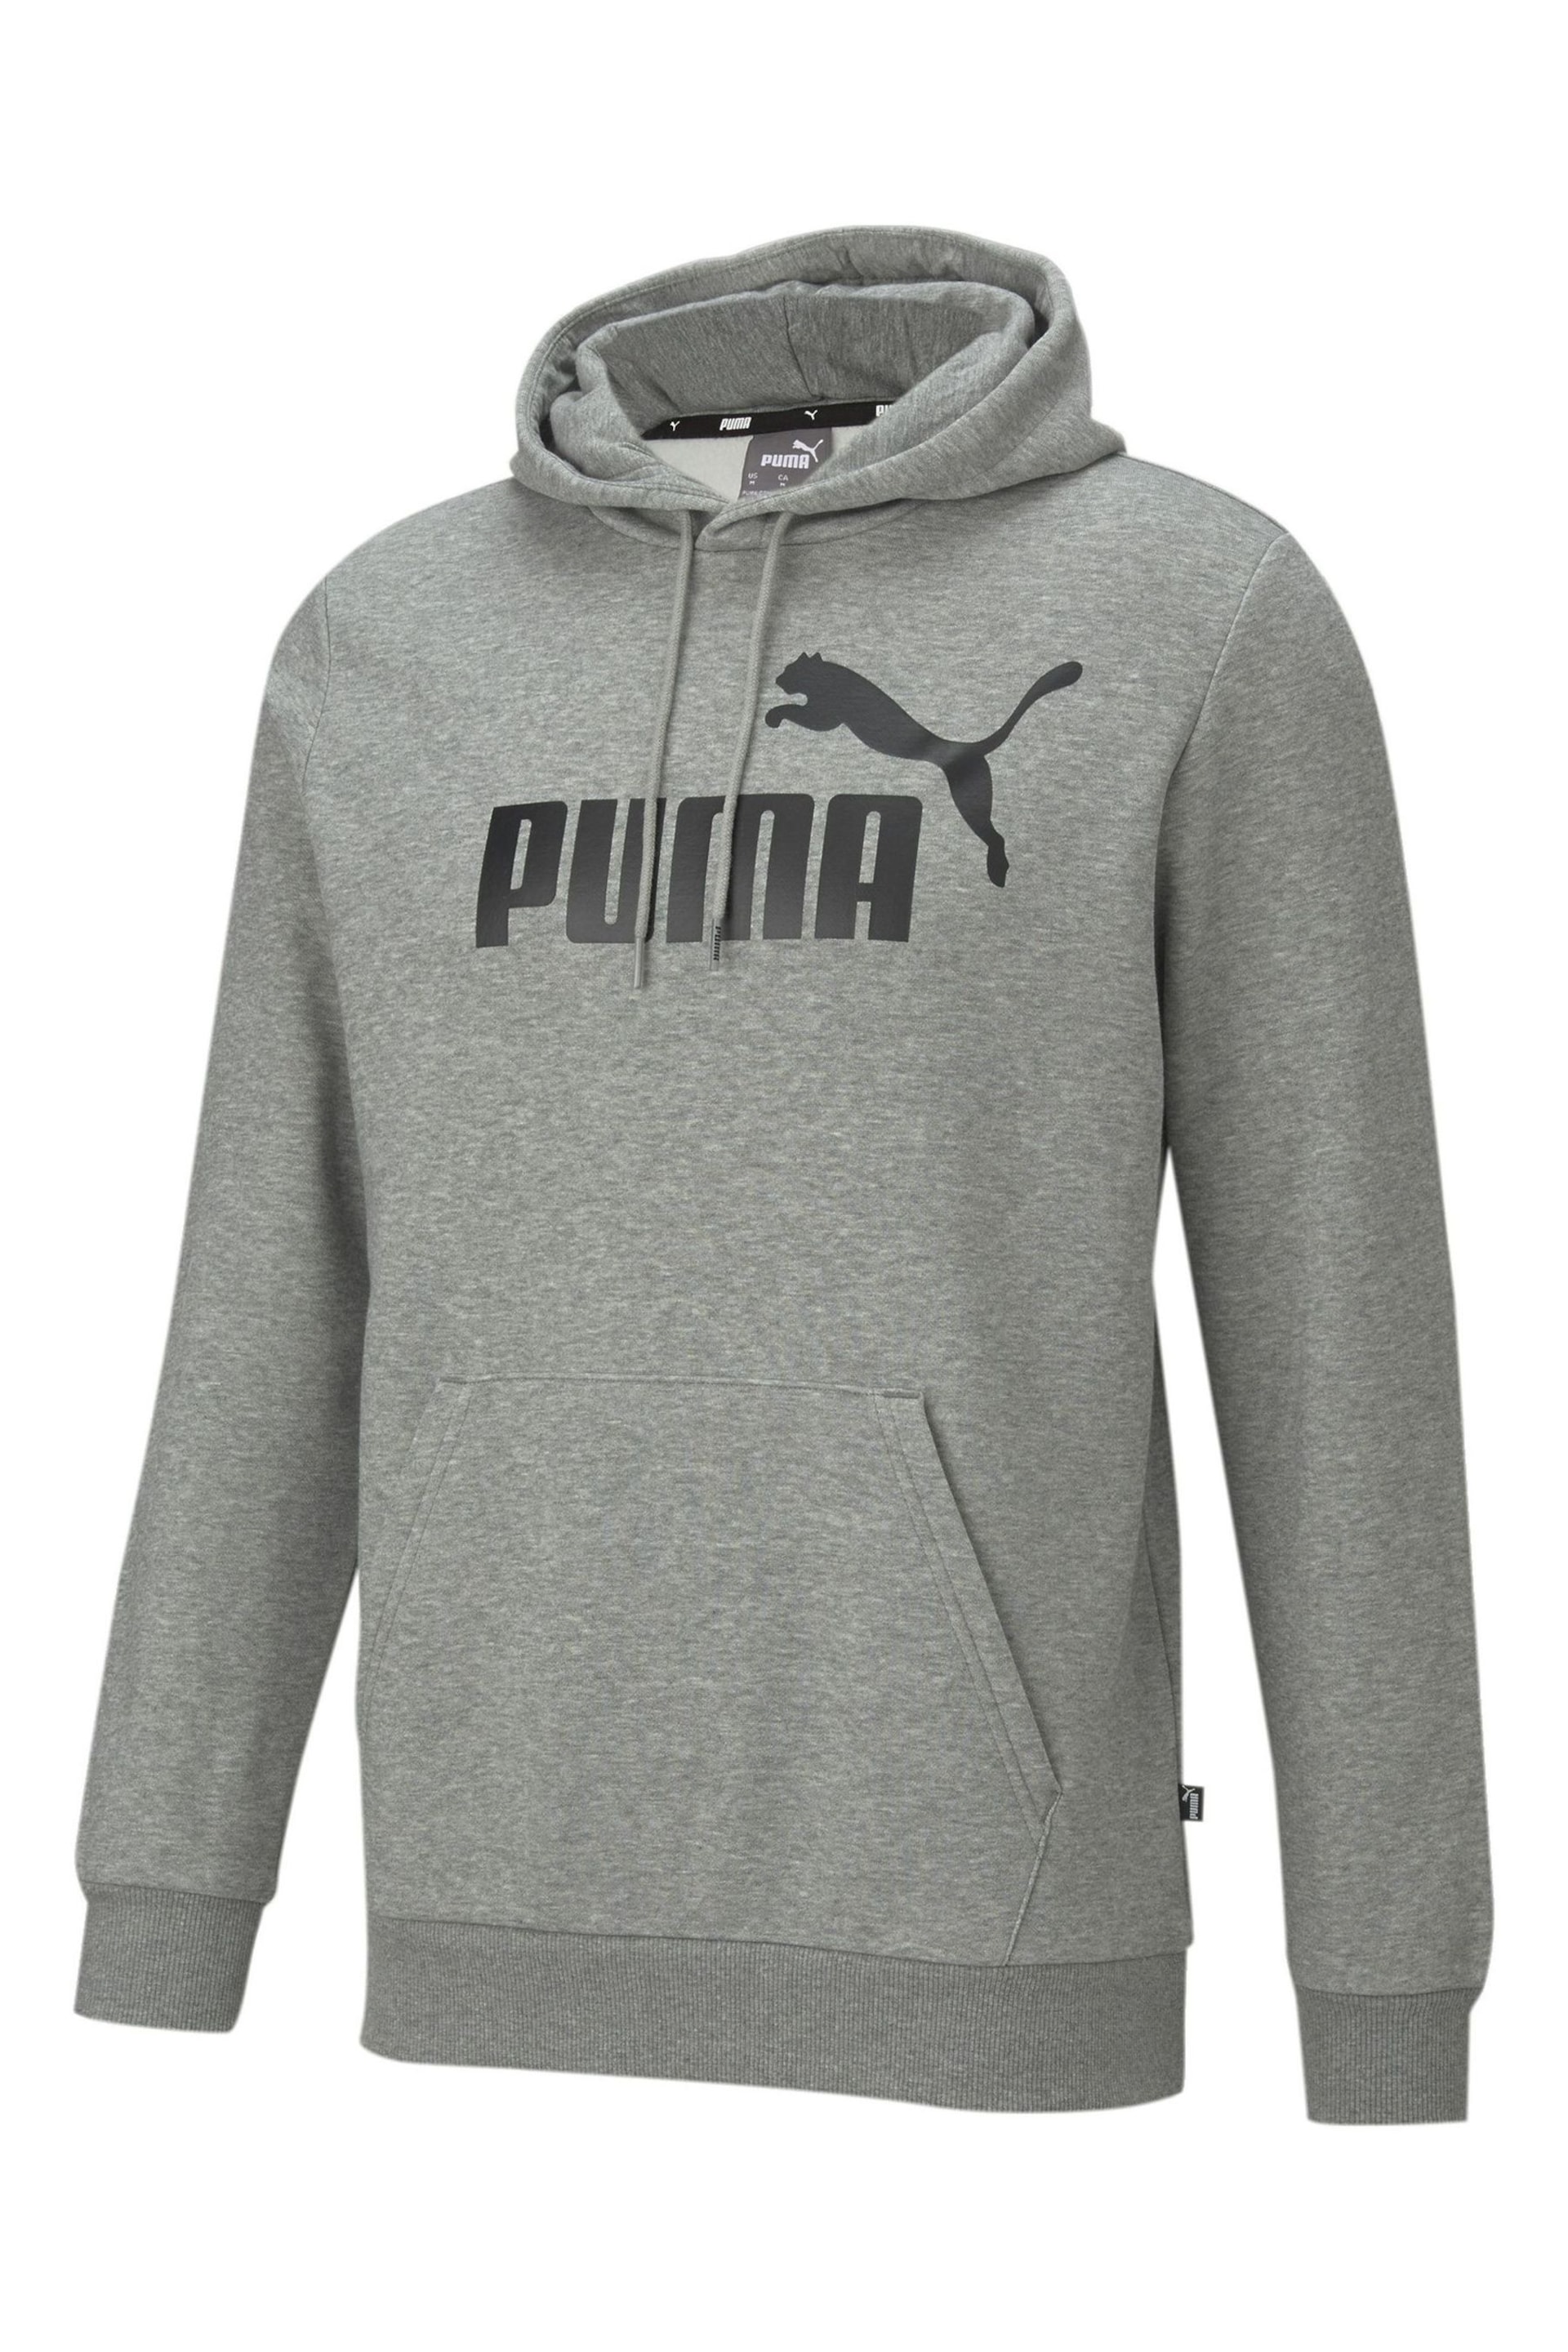 Puma Grey Essentials Big Logo Hoodie - Image 6 of 7